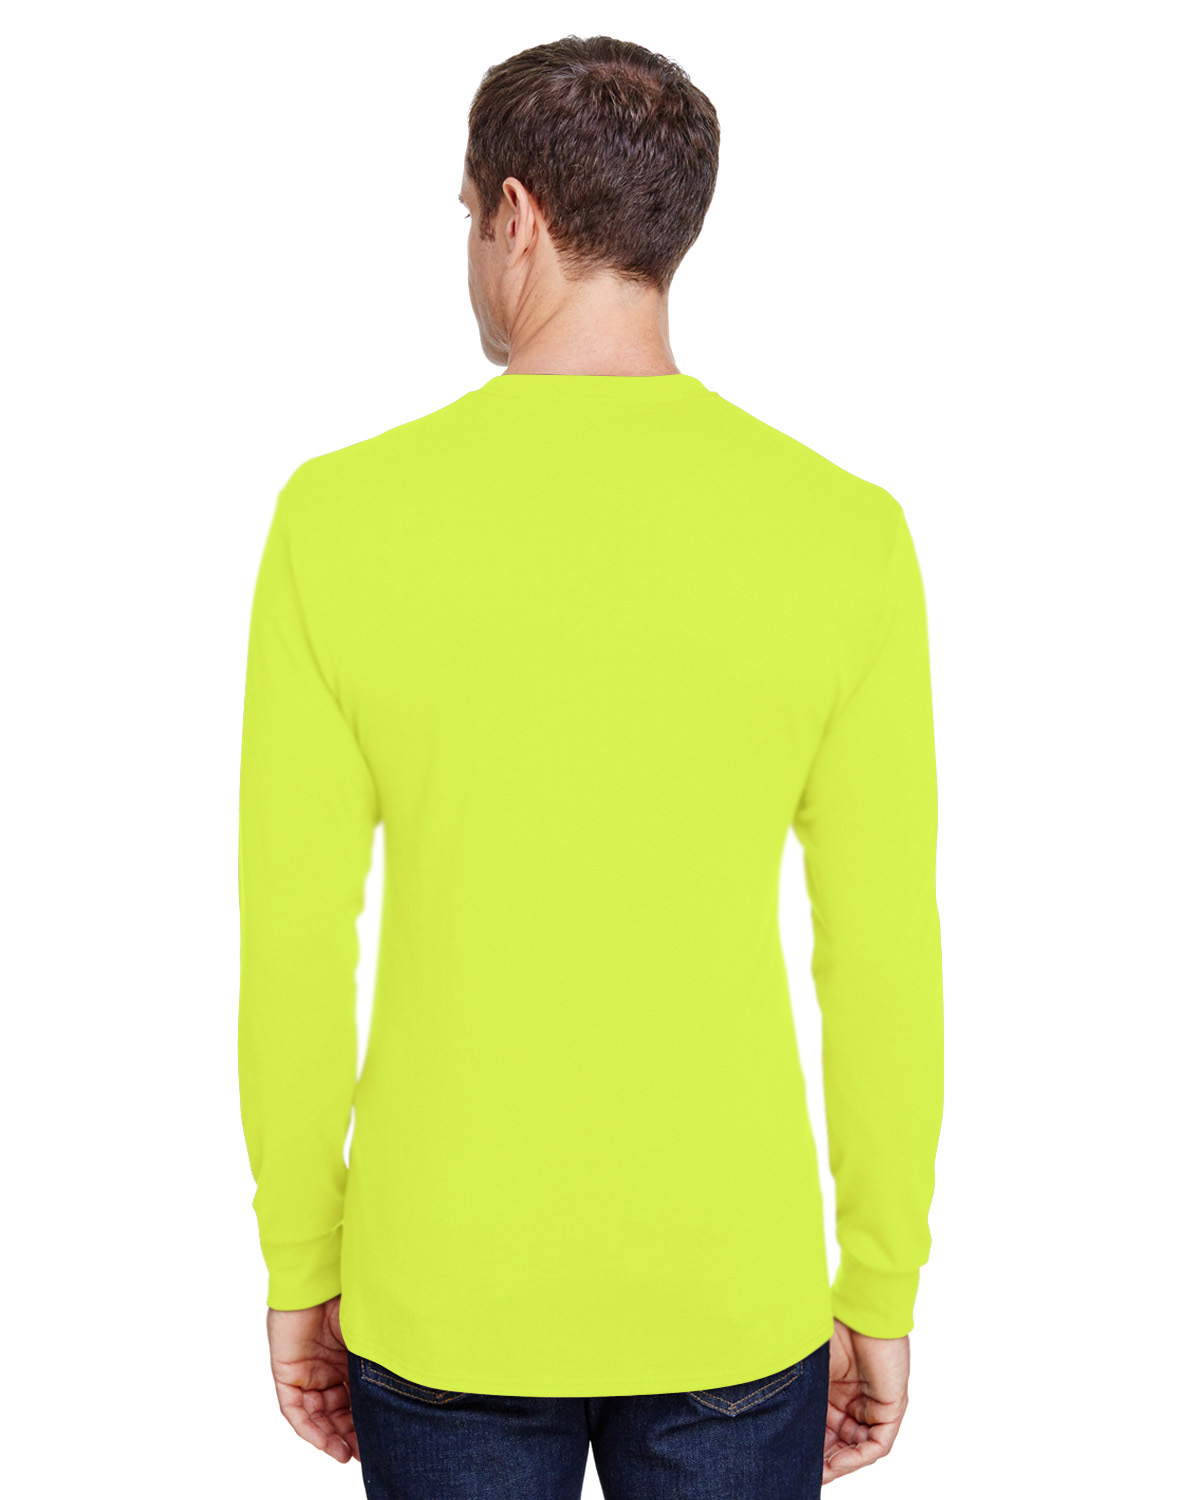 Hanes Adult Workwear Long-Sleeve Pocket T-Shirt S-4XL W120 